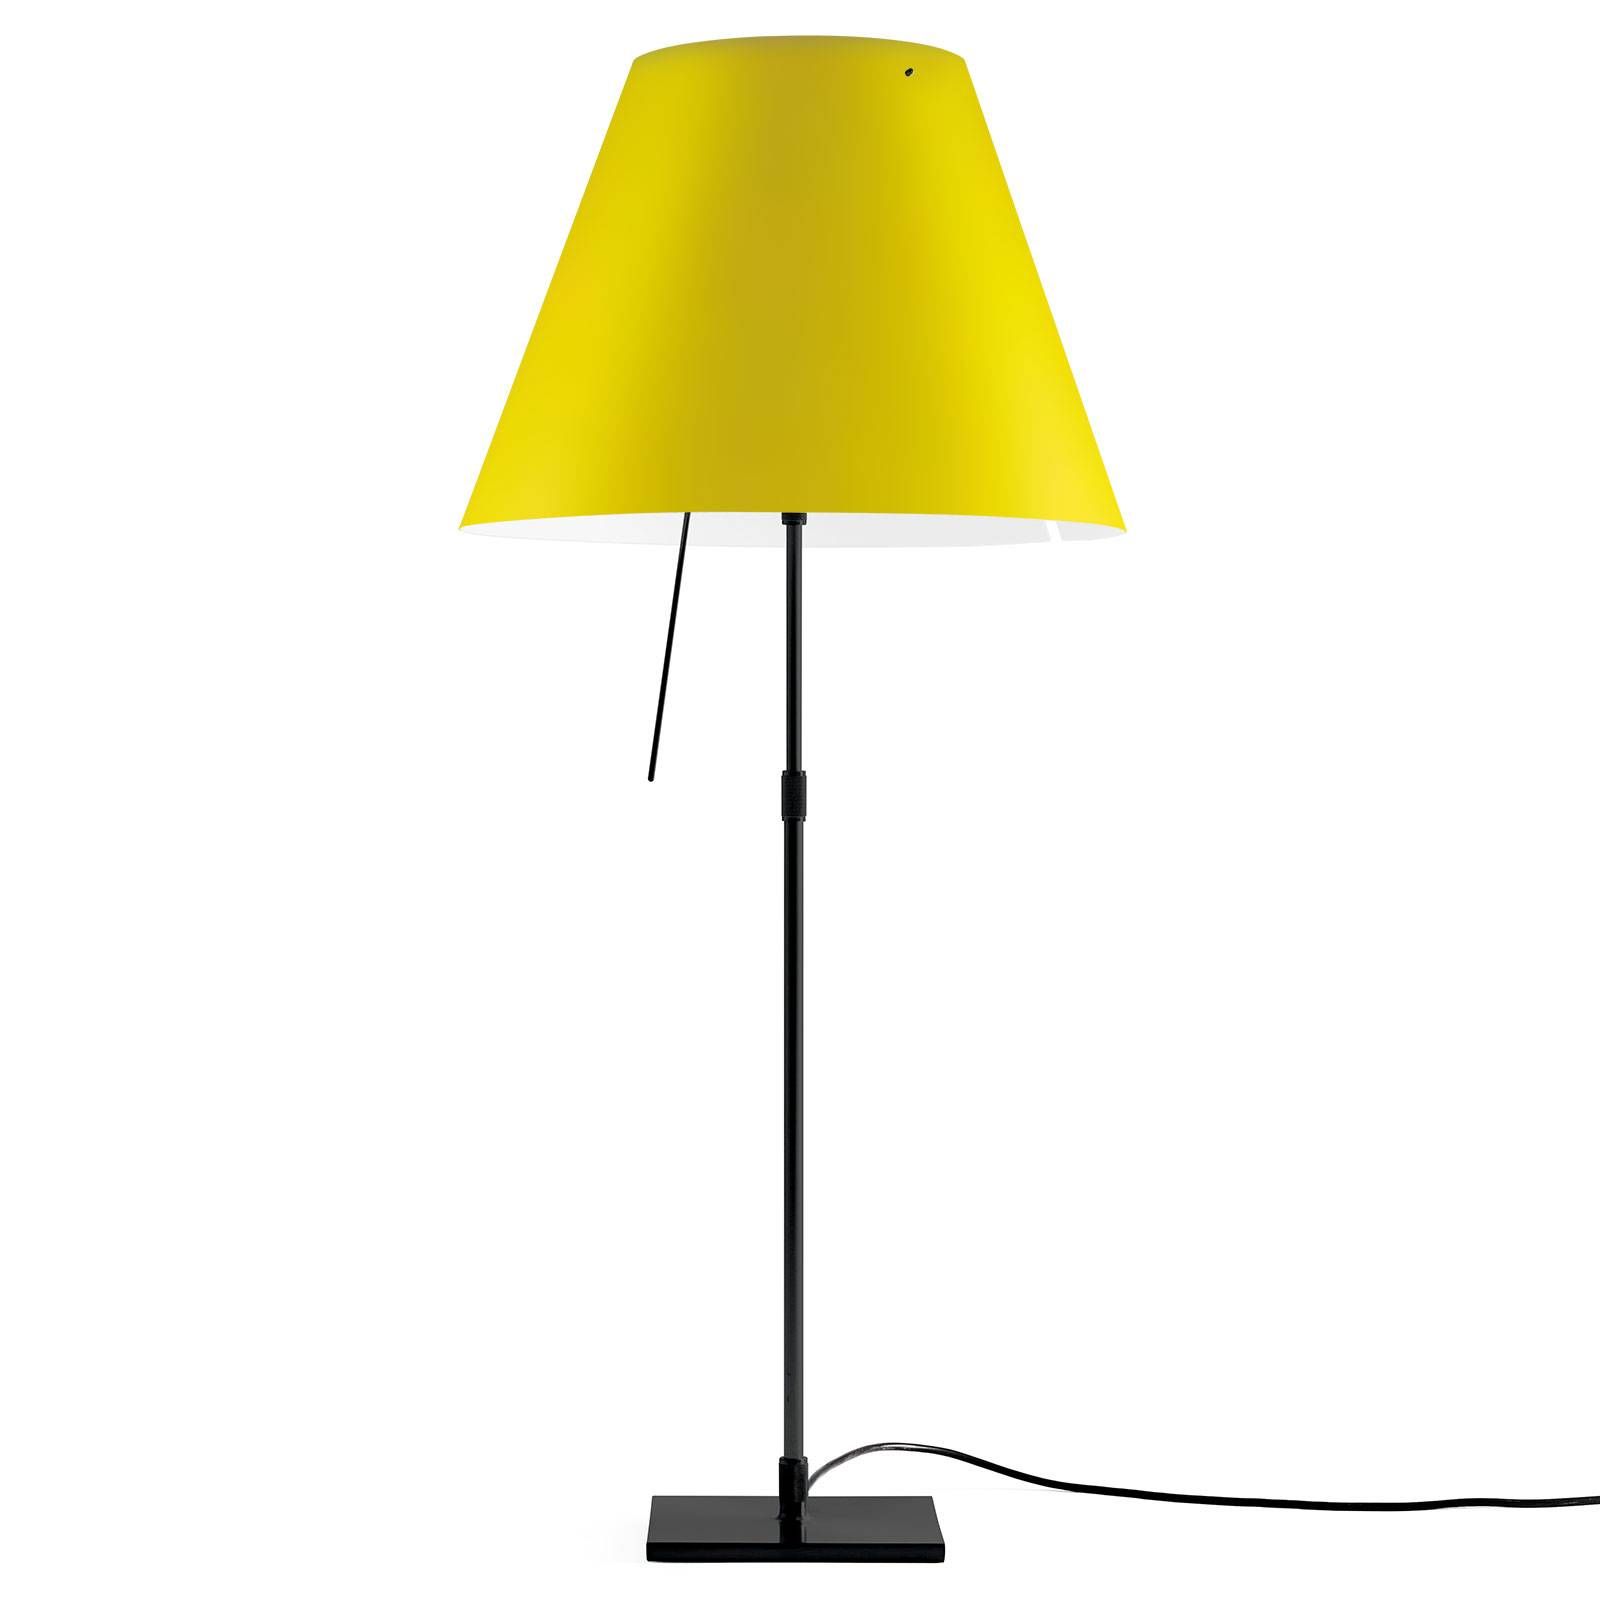 Luceplan Costanza stolná lampa D13 čierna/žltá, Obývacia izba / jedáleň, hliník, polykarbonát, E27, 140W, K: 110cm